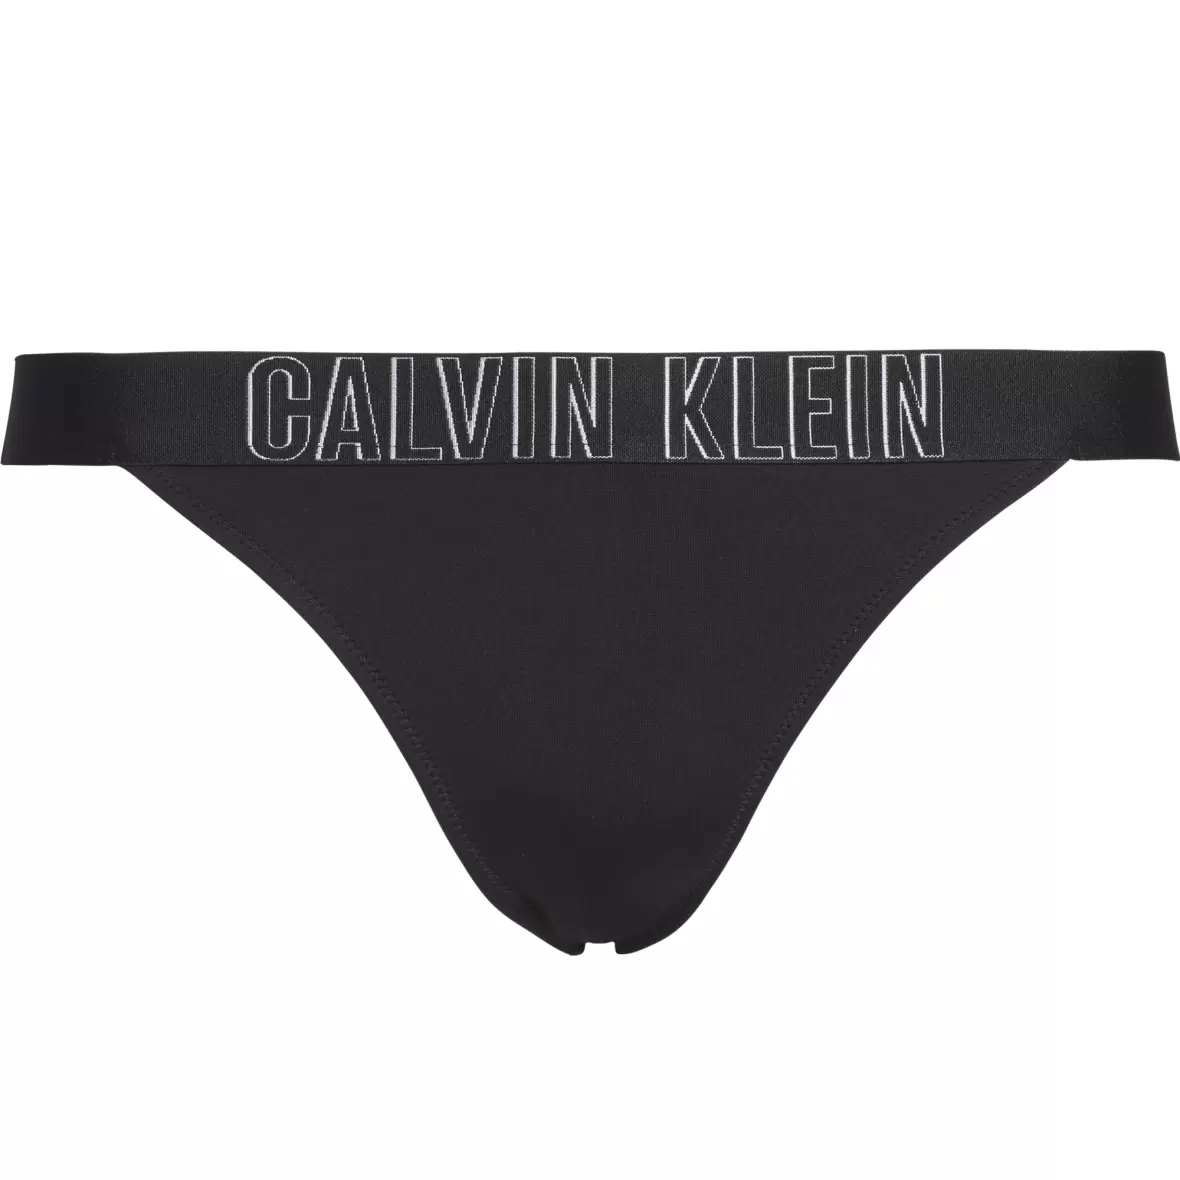 Sofie Lingeri - Bikini - - Calvin Klein - Brazilian Black